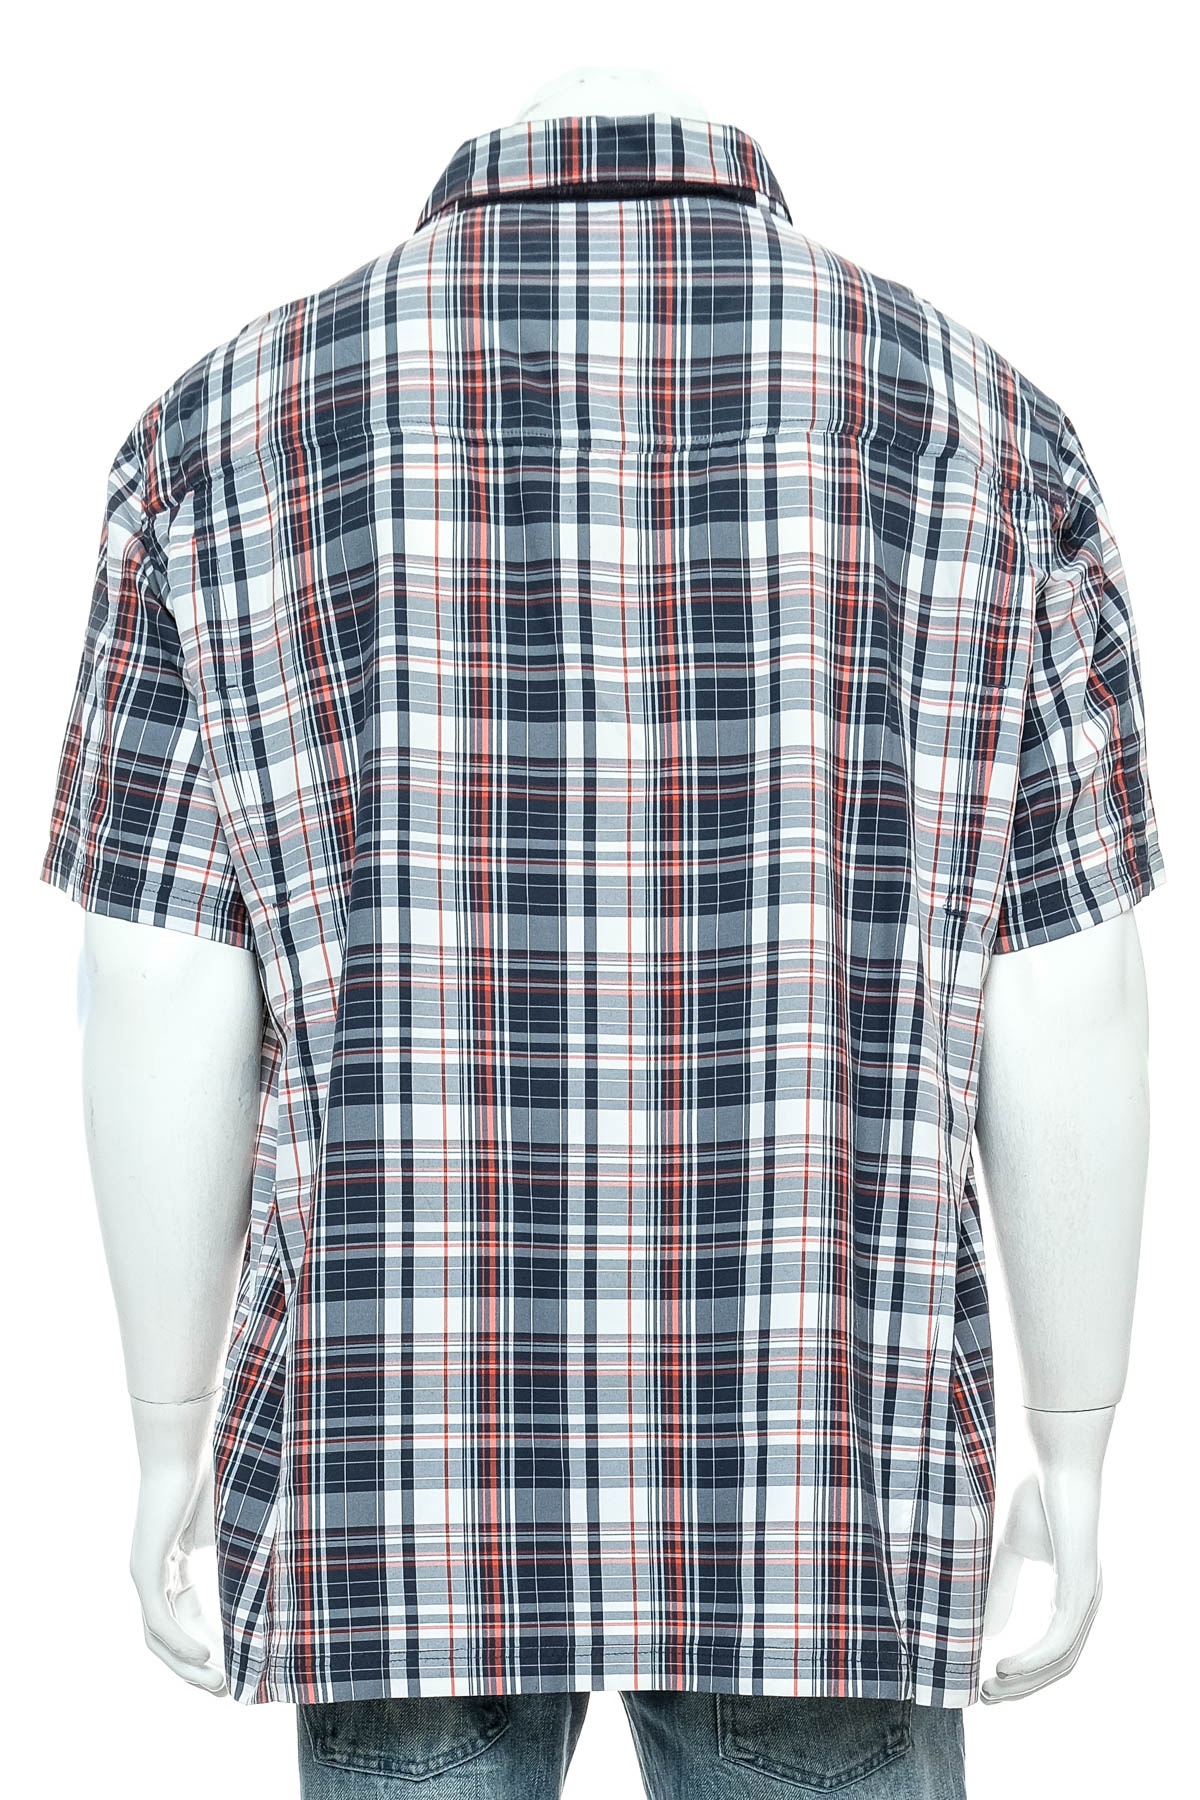 Men's shirt - McKinley - 1